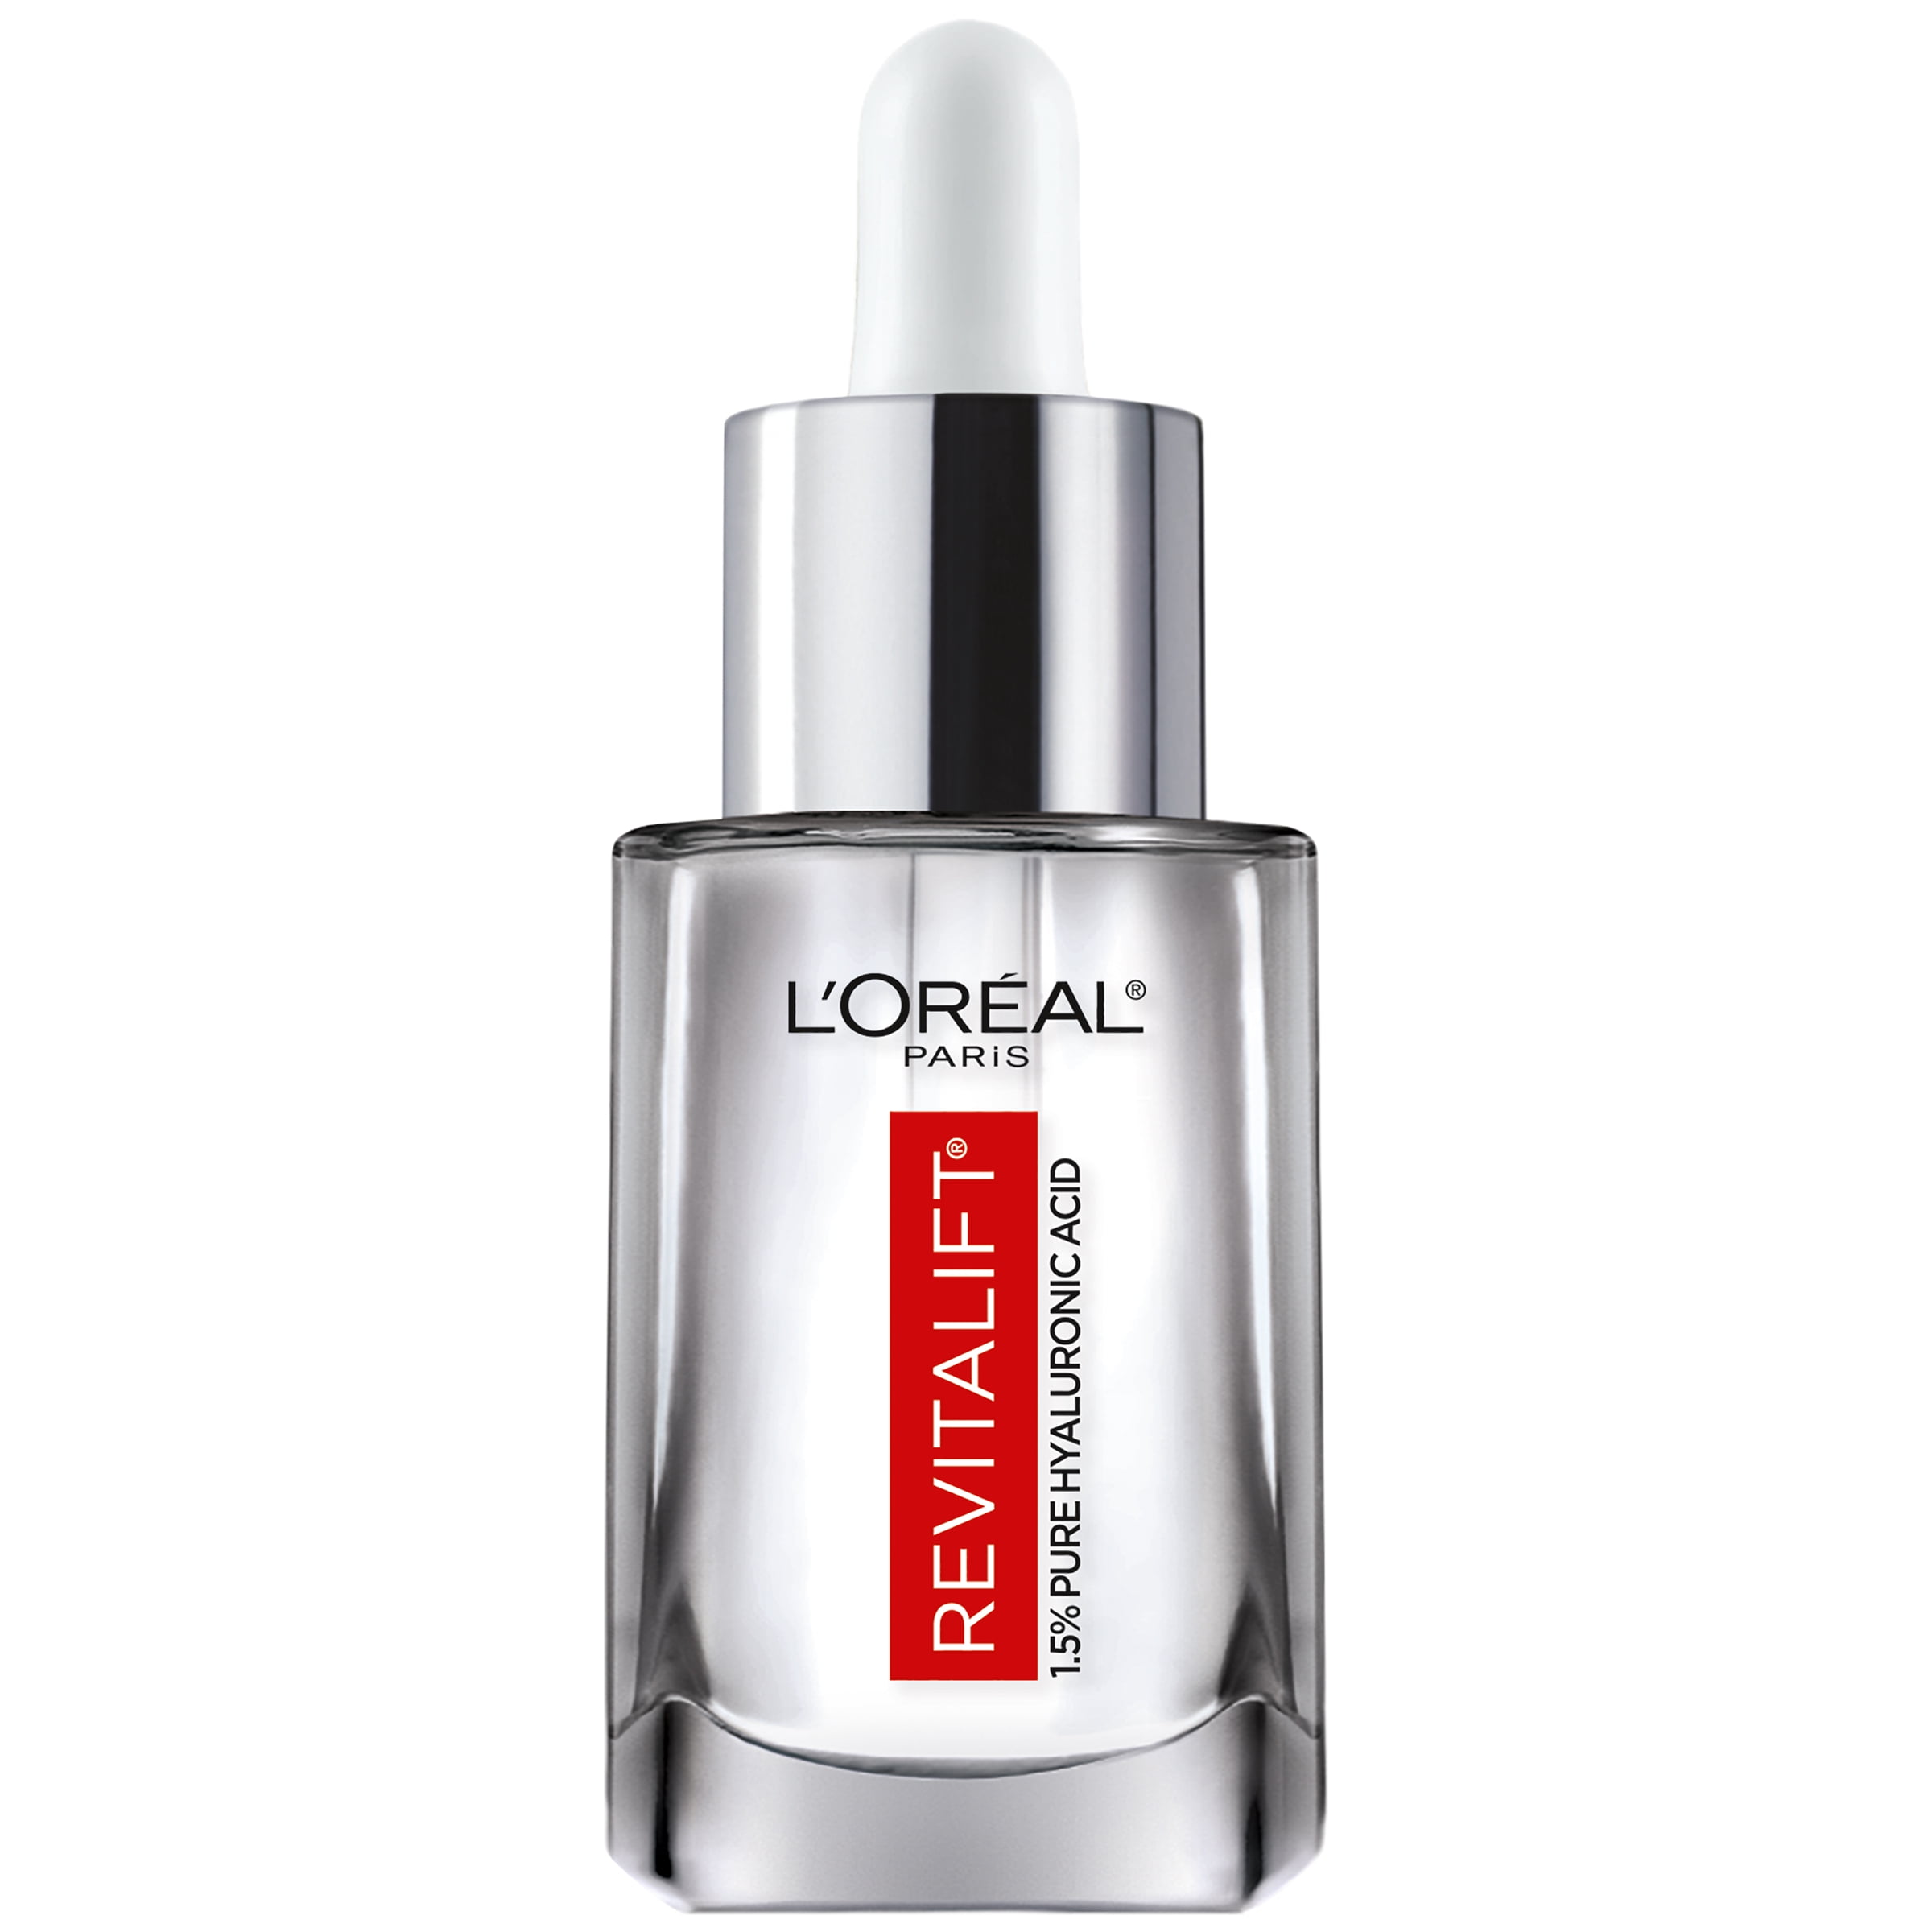 Buy L'Oreal Paris Revitalift Pure Hylauronic Acid Face Serum, 0.5 fl oz Online in Ireland. 148112821